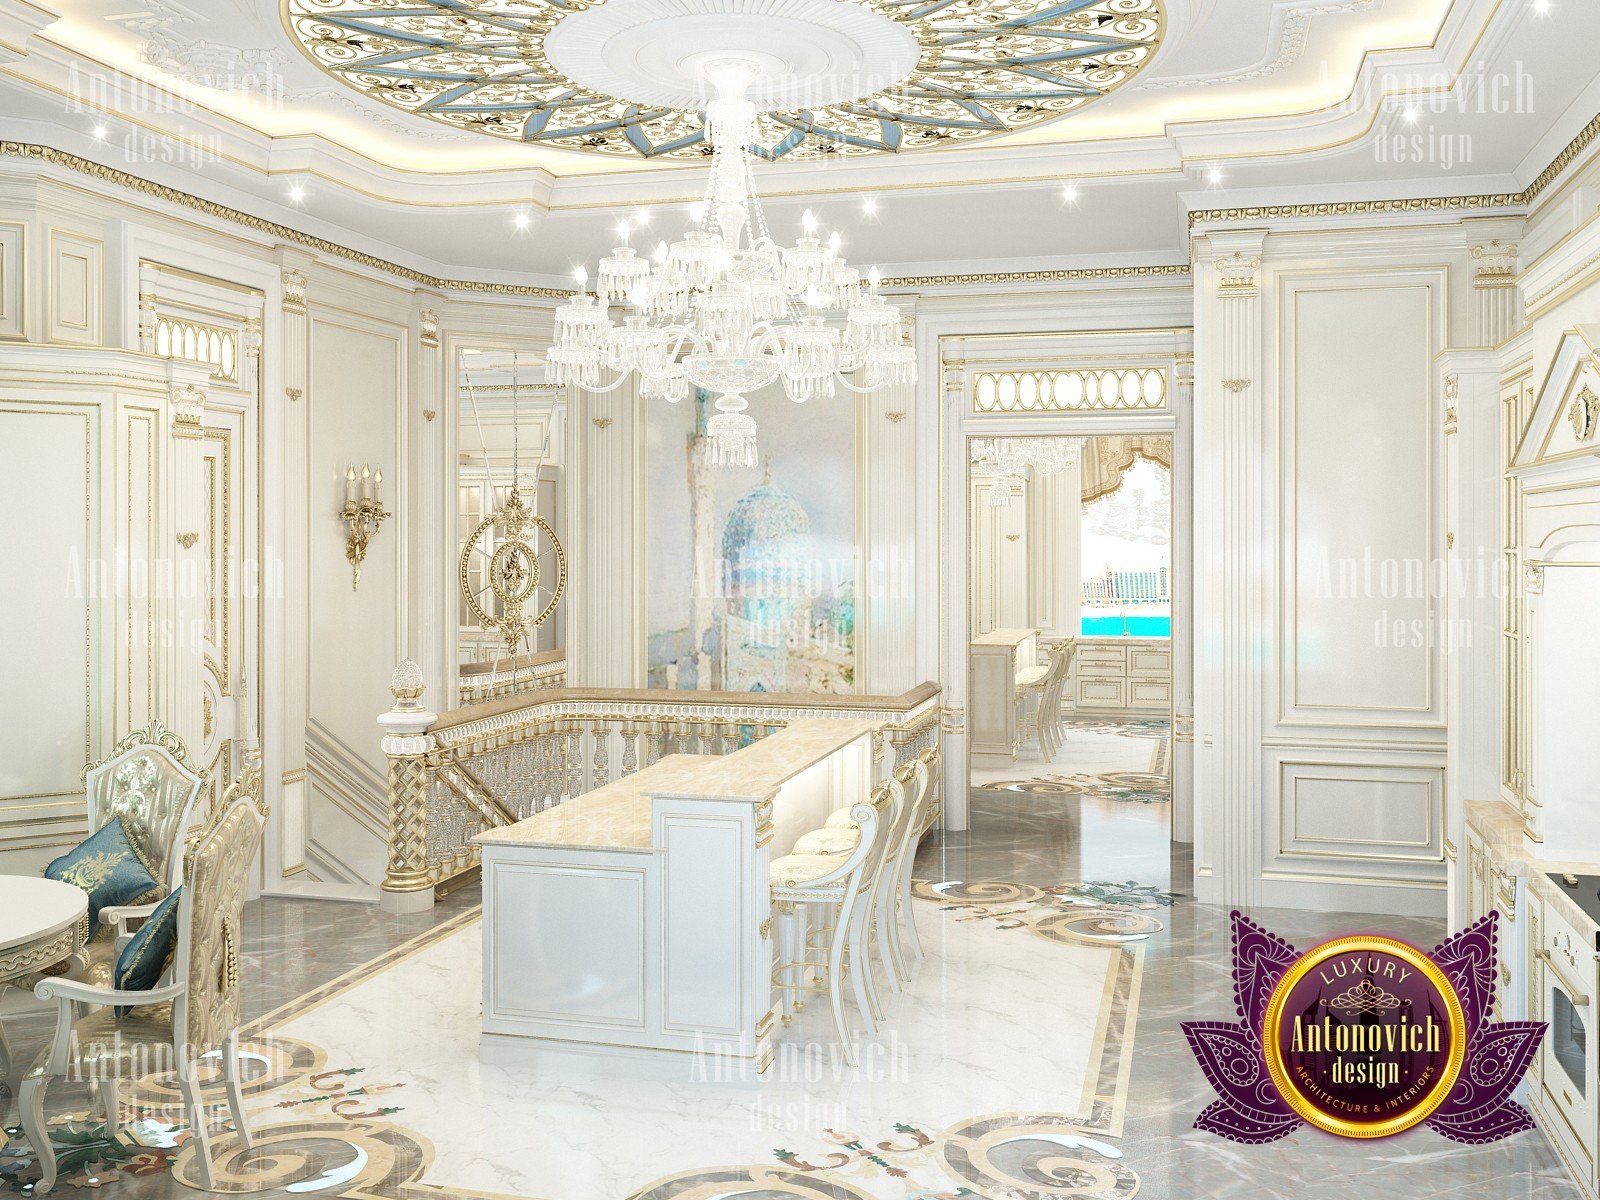 Top 10 interior design company UAE